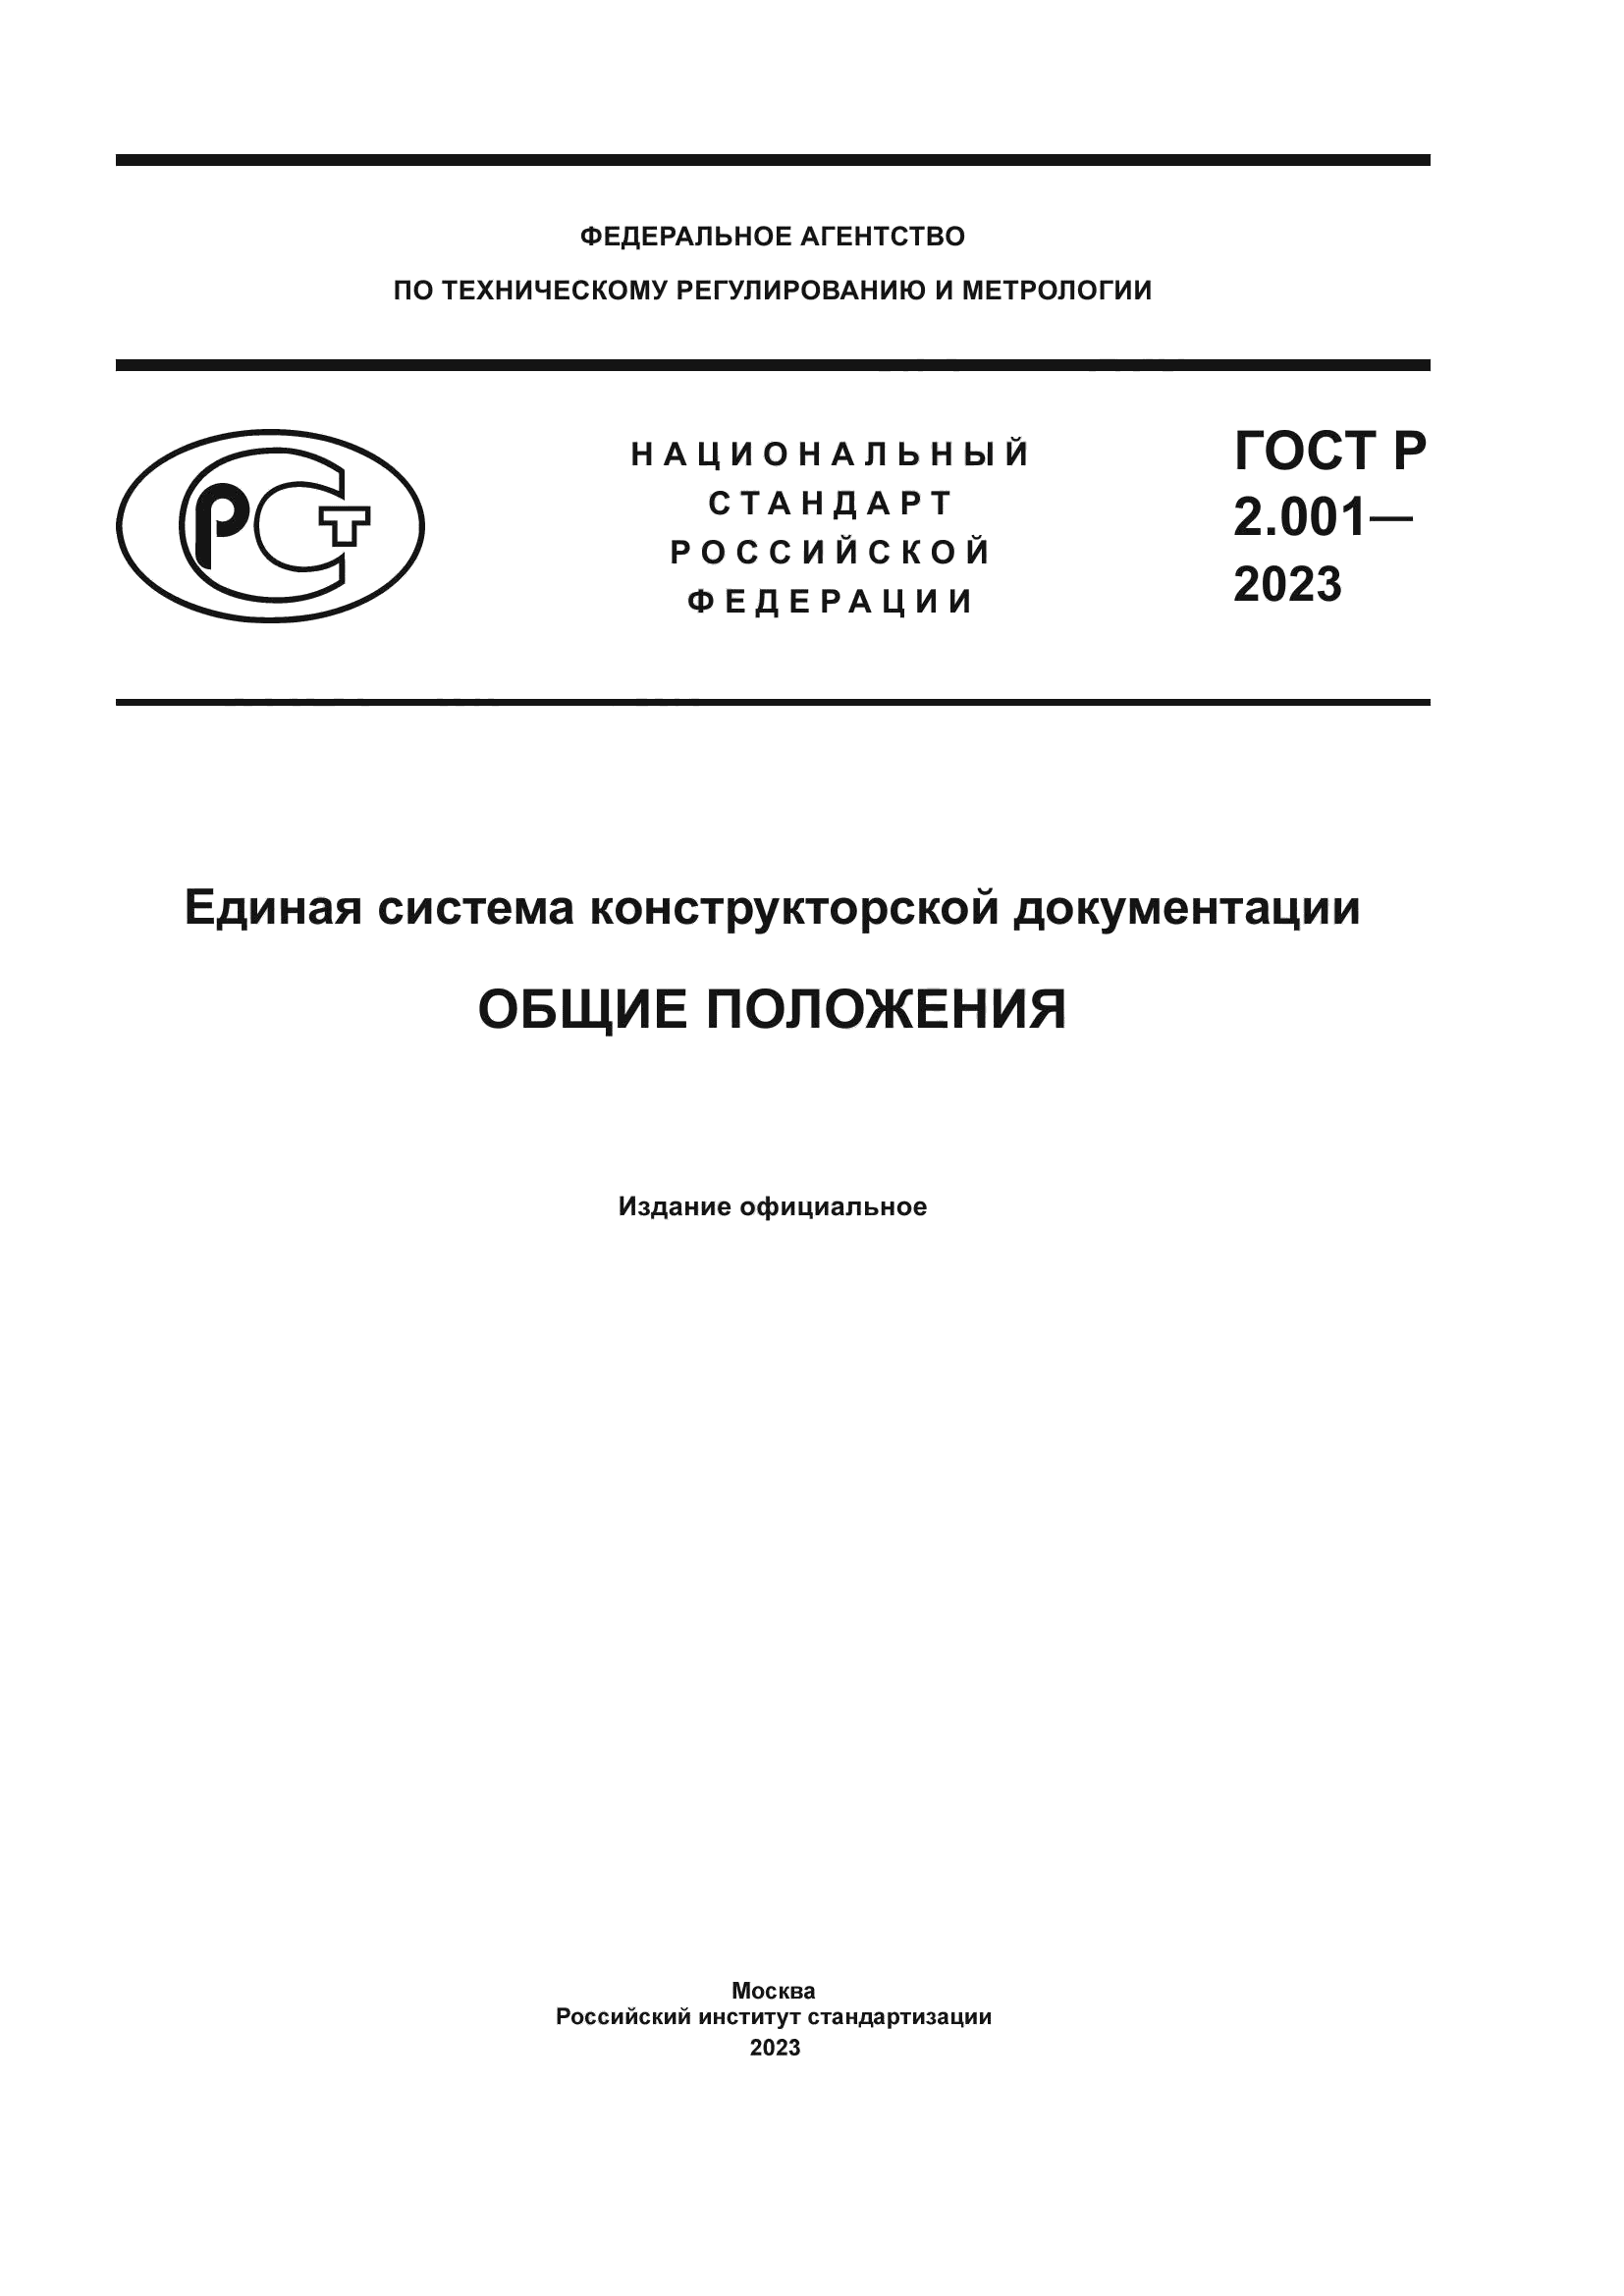 ГОСТ Р 2.001-2023